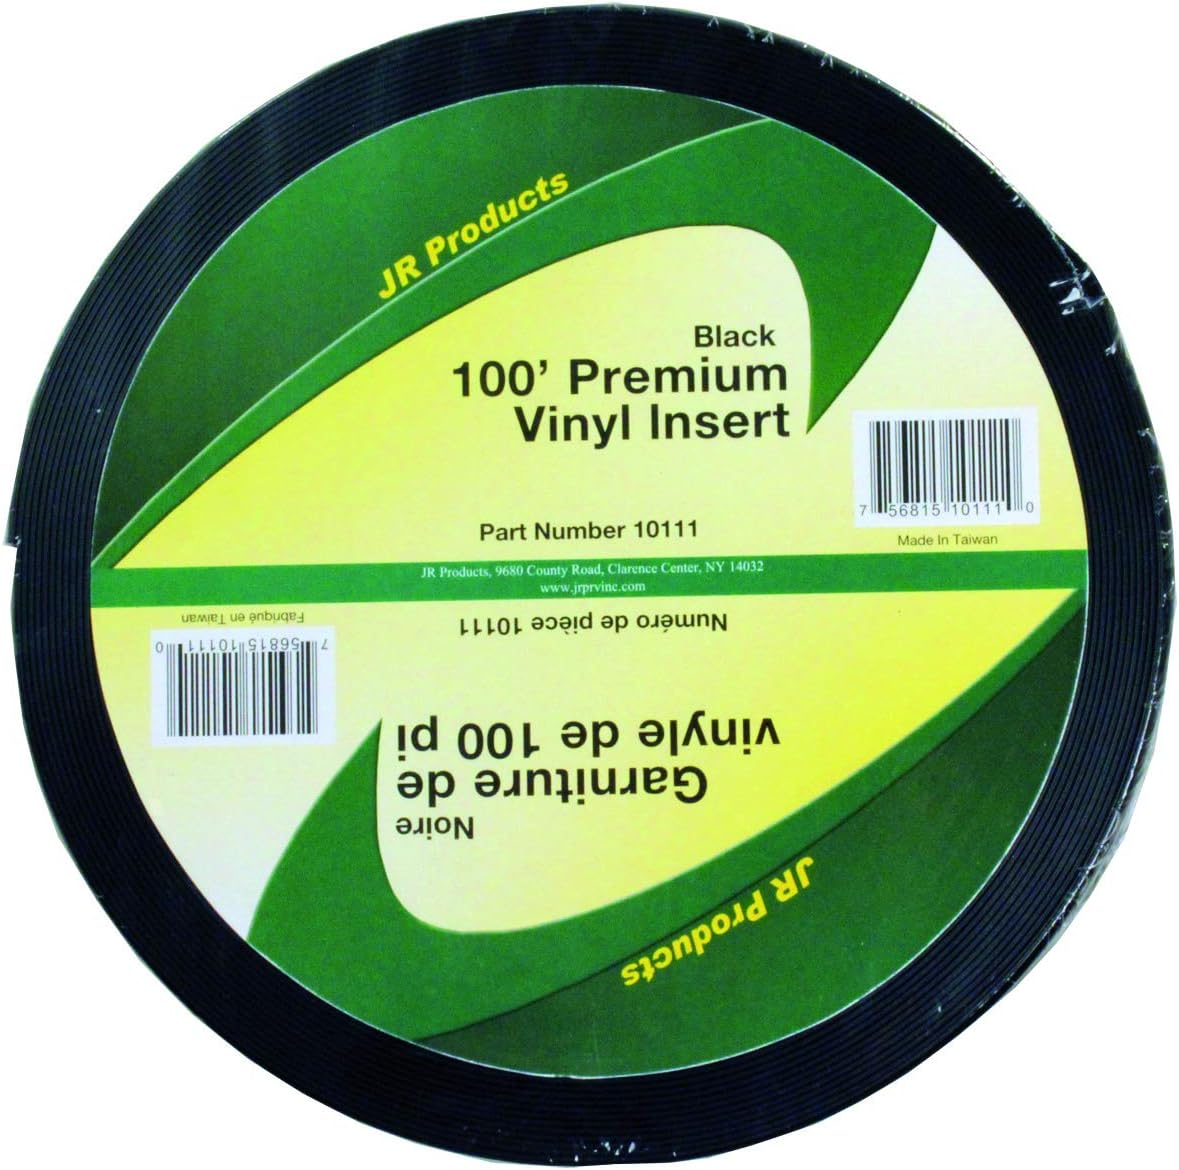 JR Products 10111 Black 100' Premium Vinyl Insert